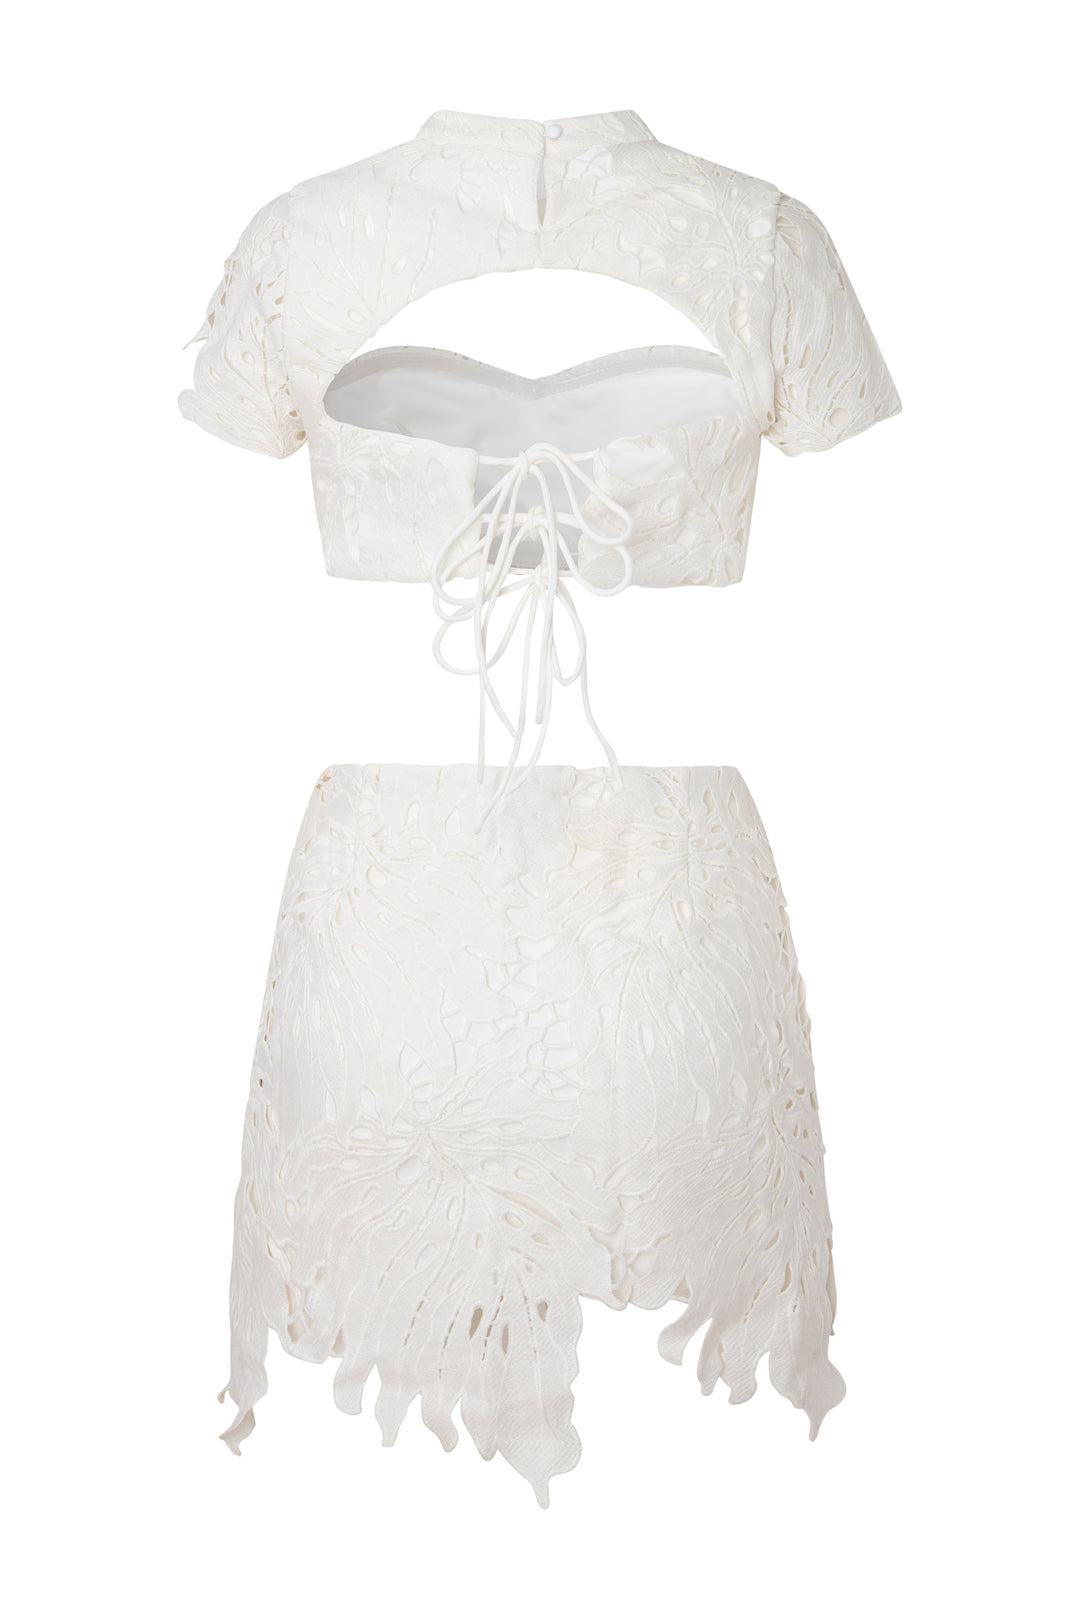 "Gardenia" Skirt, Bandeau and Sleeves 3 Piece Set - White